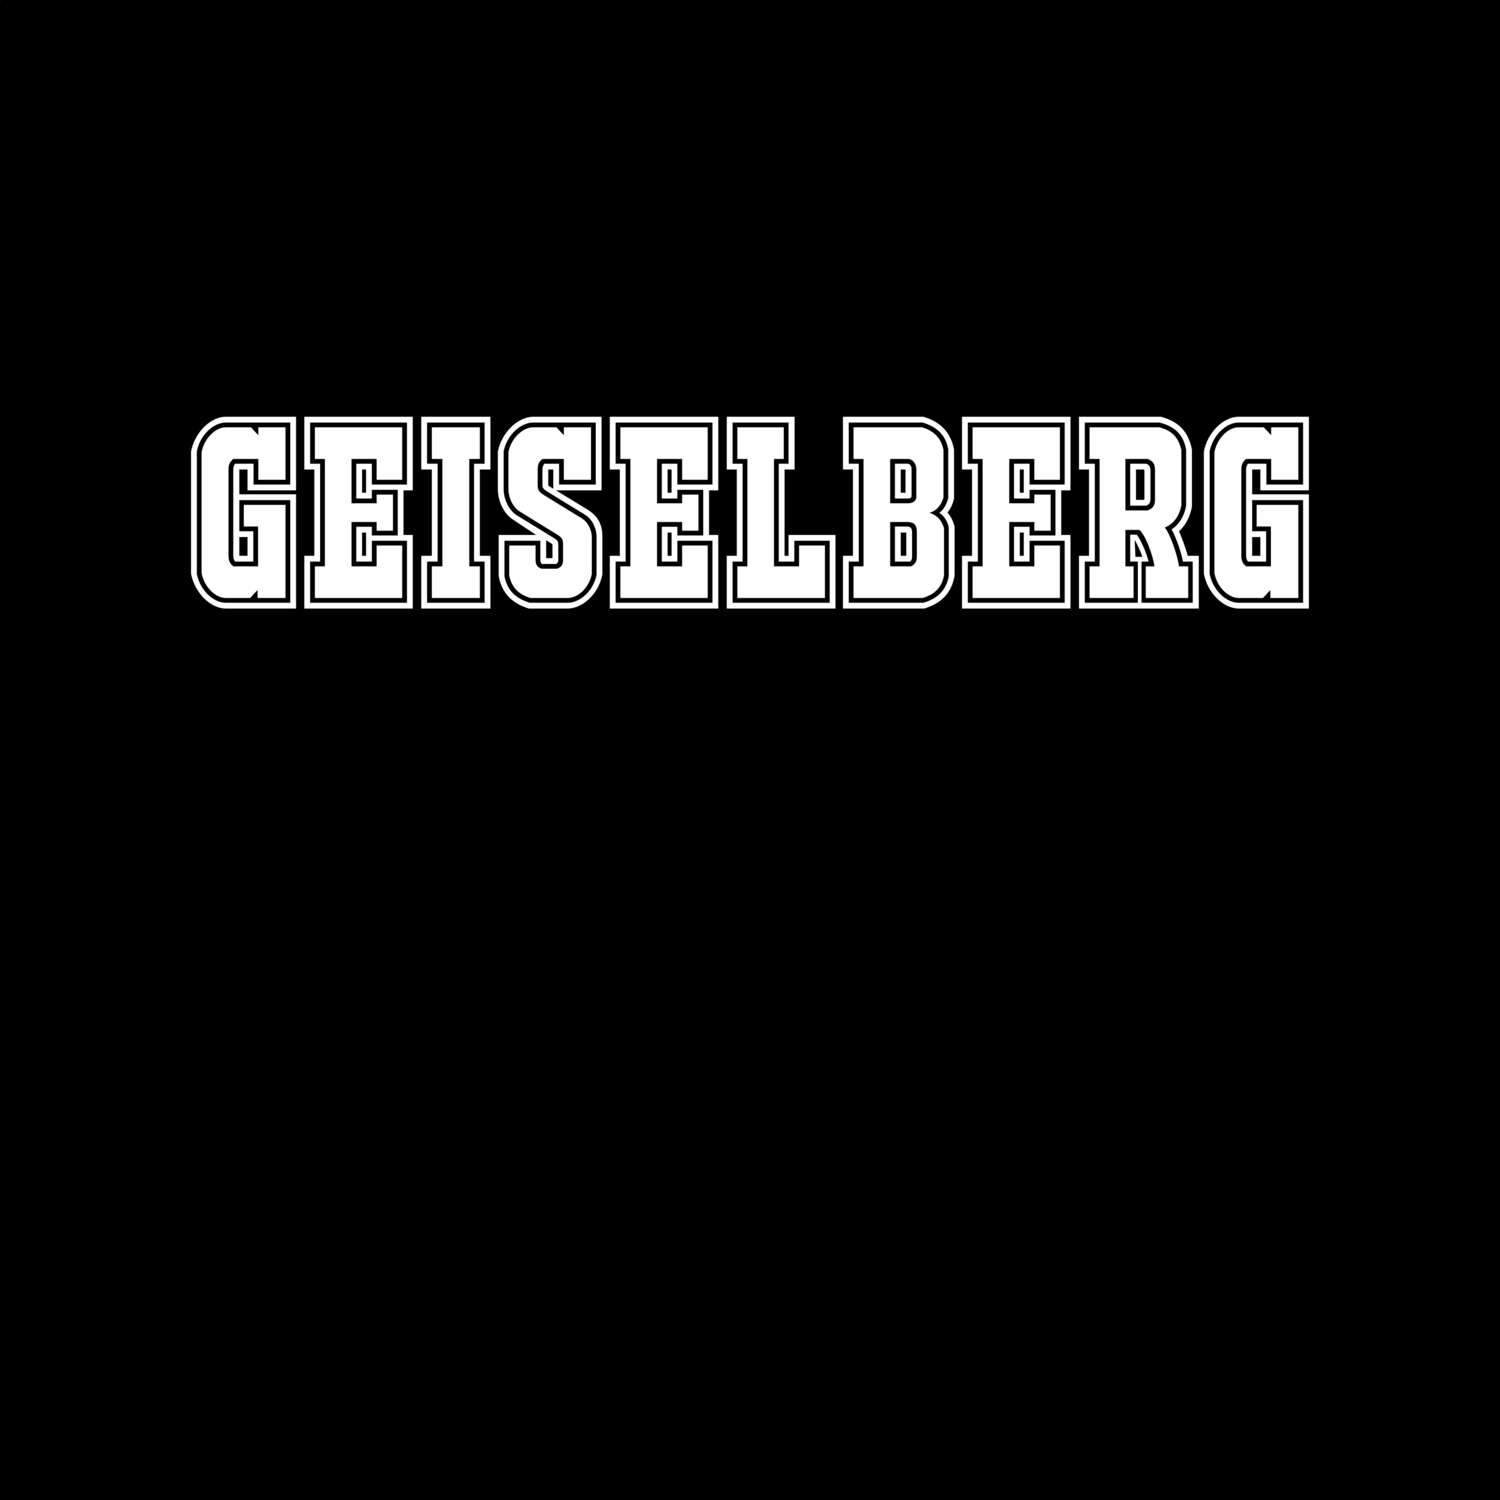 Geiselberg T-Shirt »Classic«